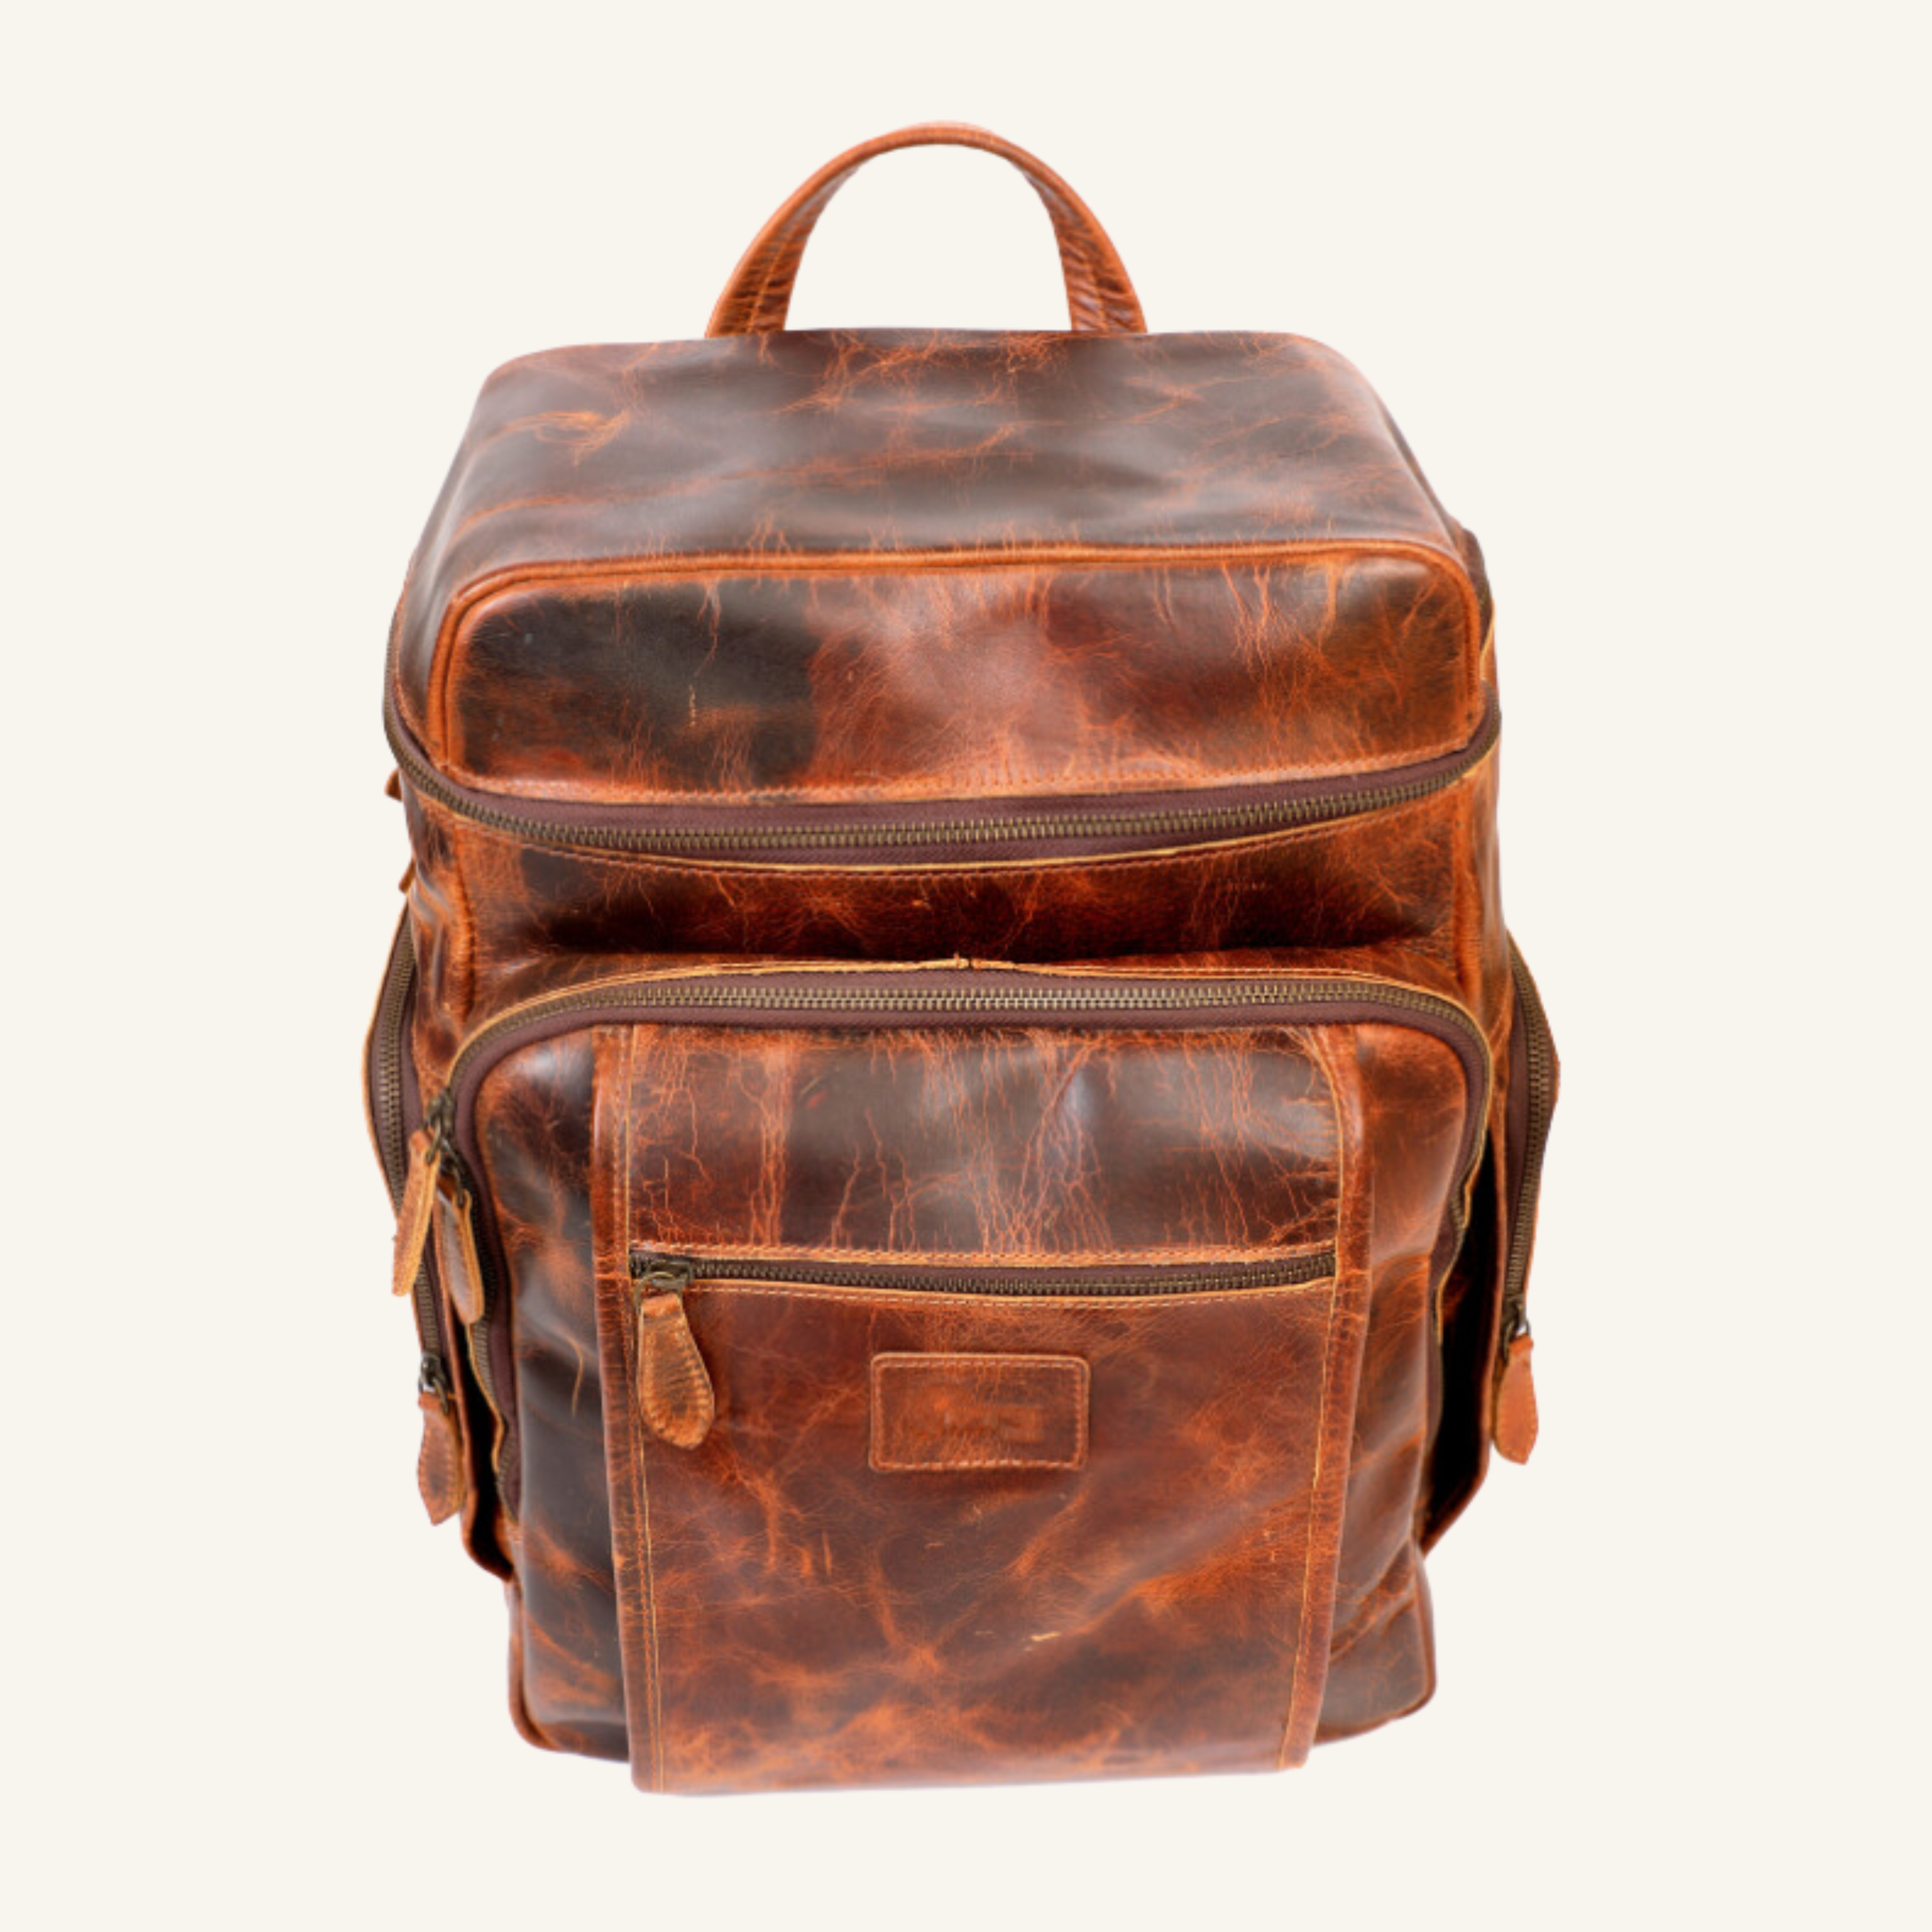 Odyssey Travel Backpack